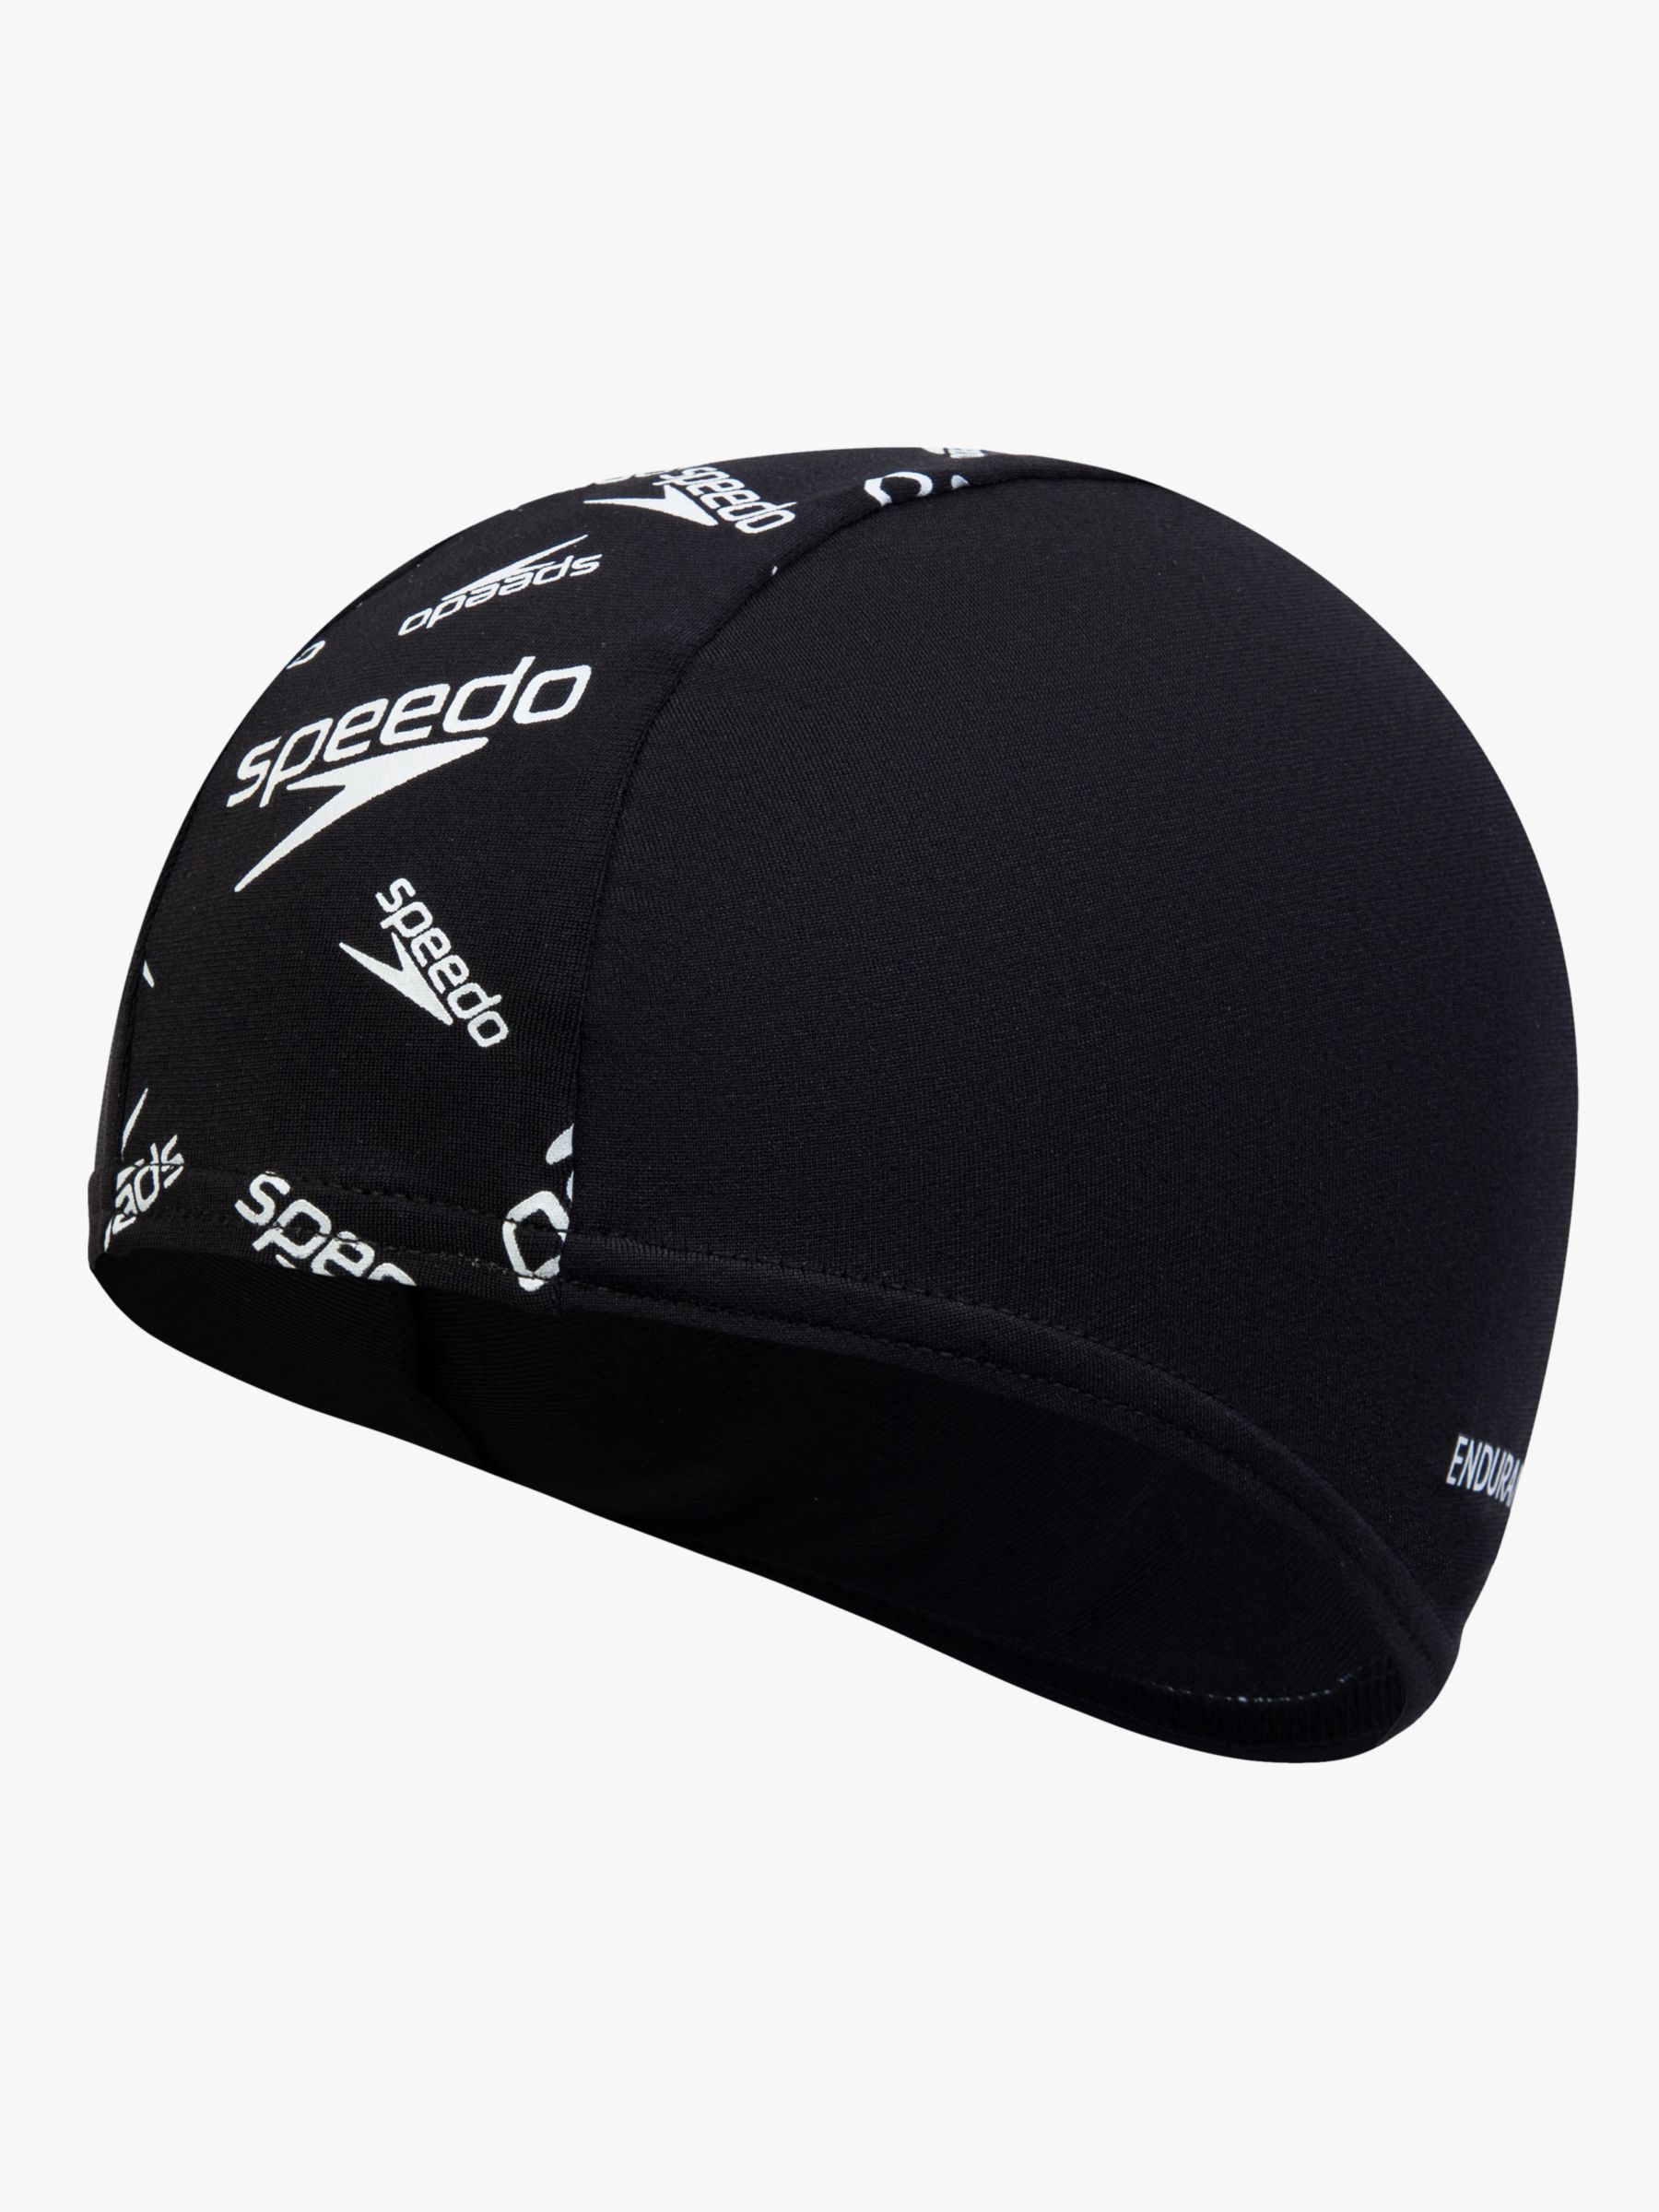 Speedo Boomstar Endurance+ Swimming Cap, Black/White